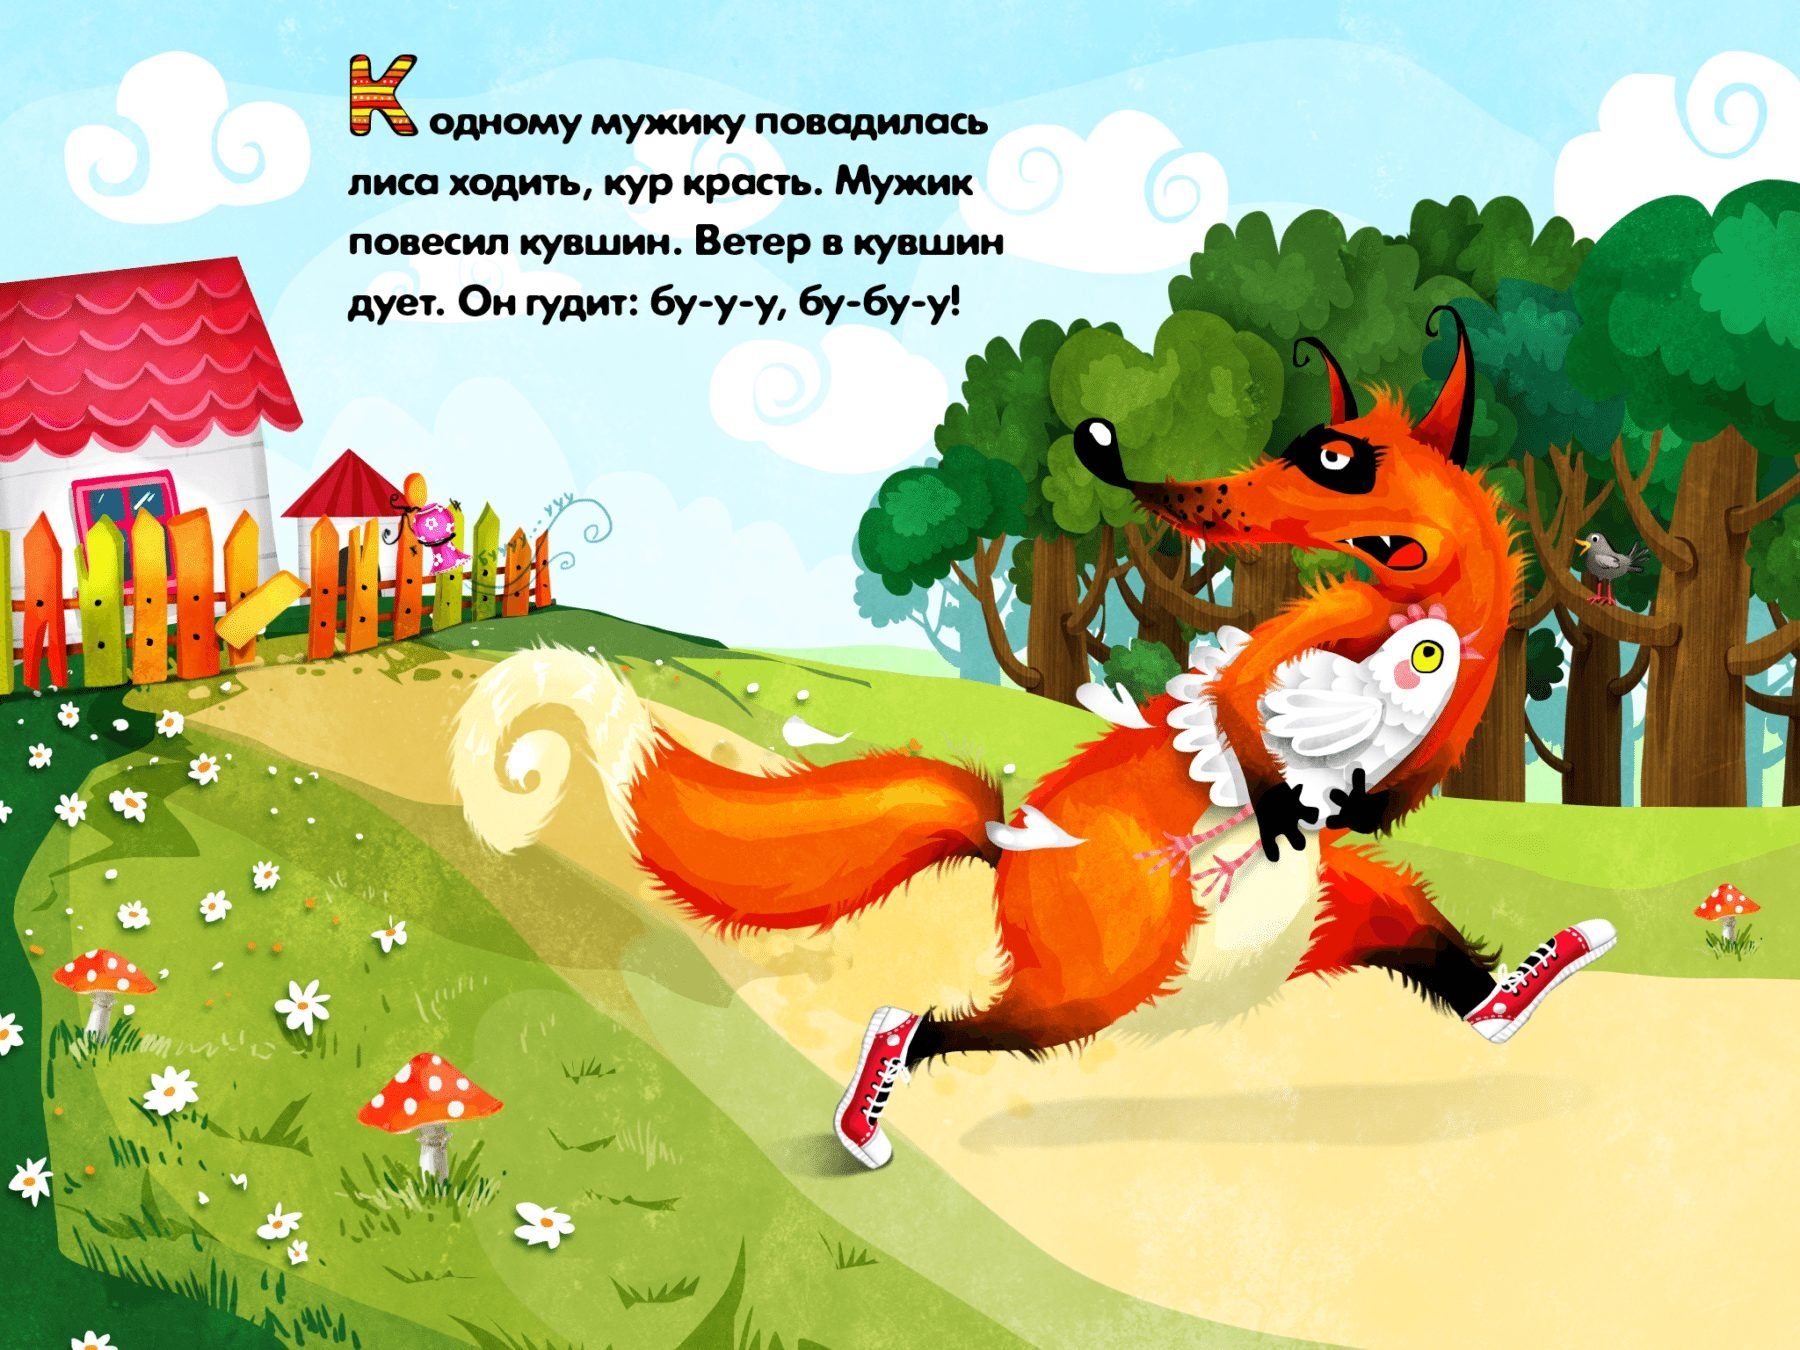 Дом сказка лиса. Сказки про лису. Сказки про лисичку для детей. Сказочная лиса. Сказки про лису русские народные.